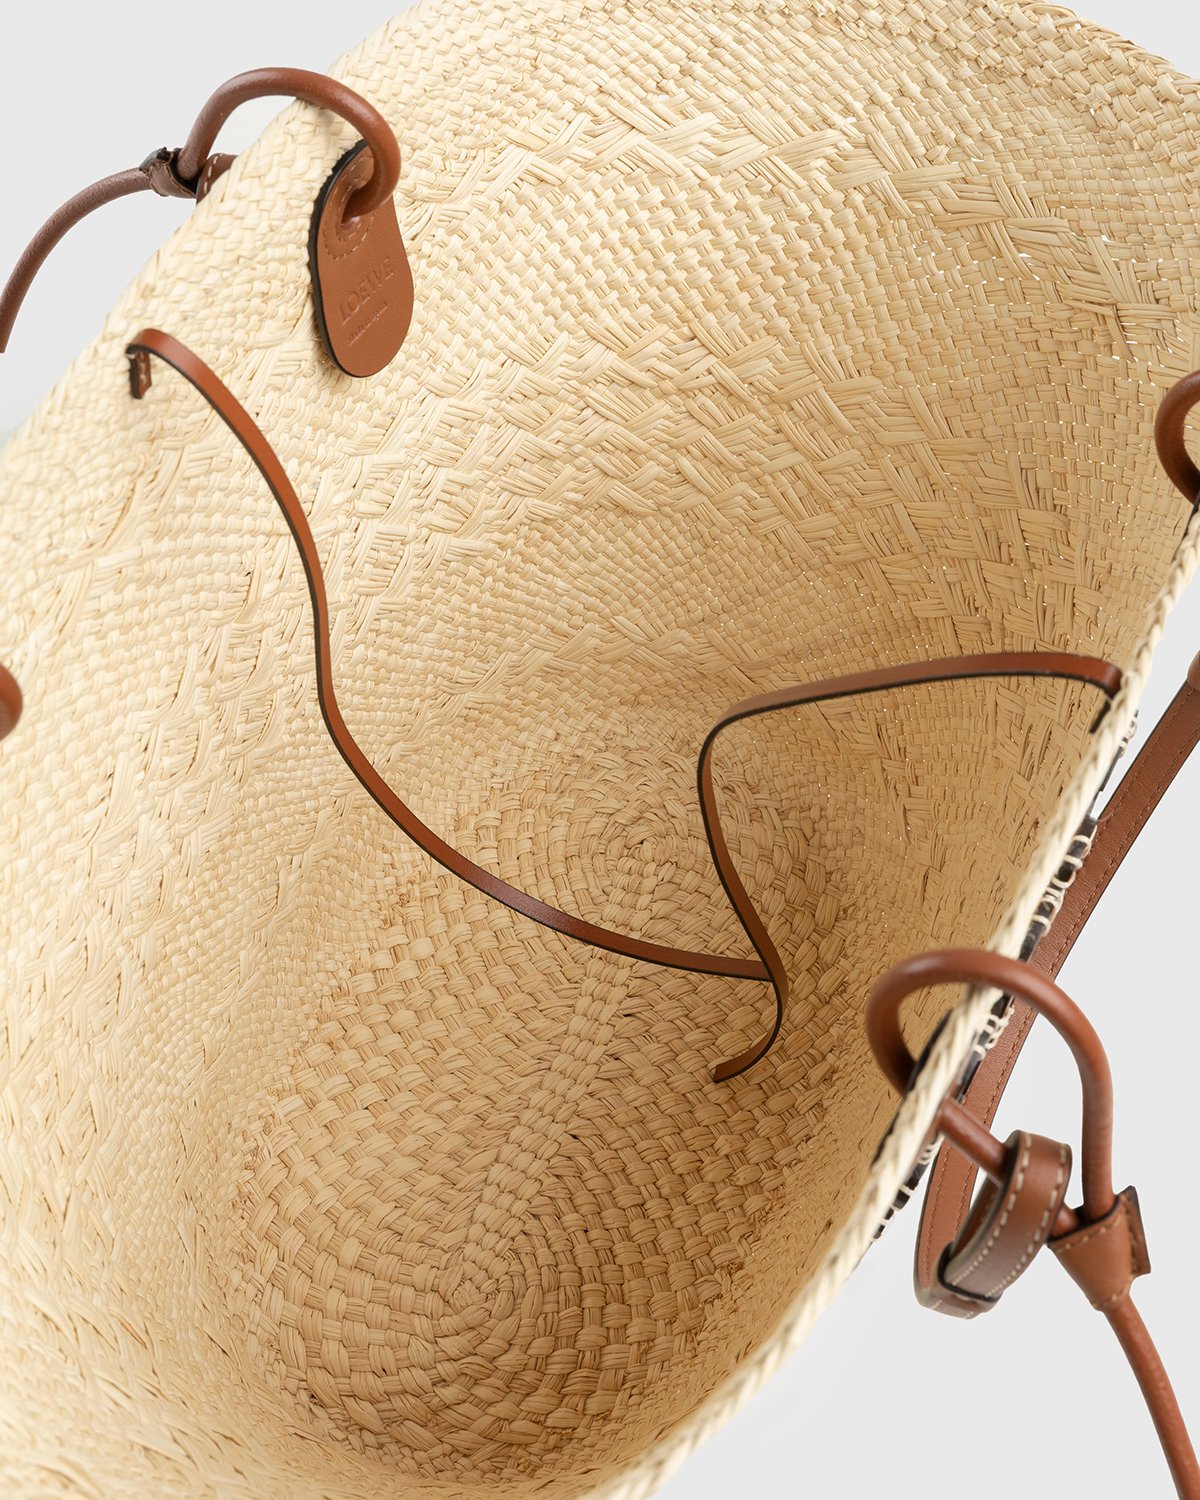 Loewe - Paula's Ibiza Anagram Basket Bag Natural/Tan - Accessories - Beige - Image 4